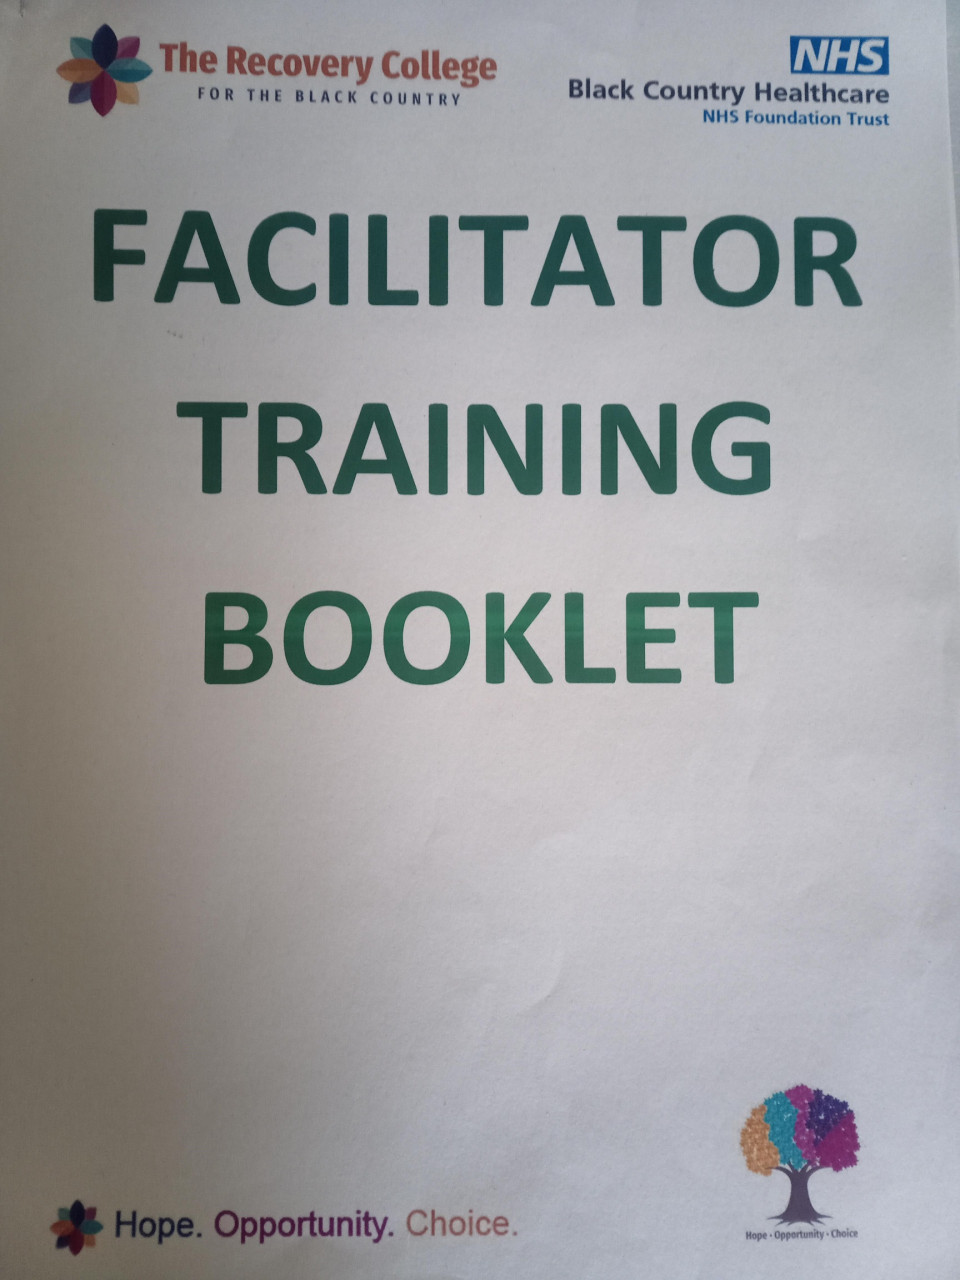 Facilitator-training-booklet-phot_20210817-142627_1